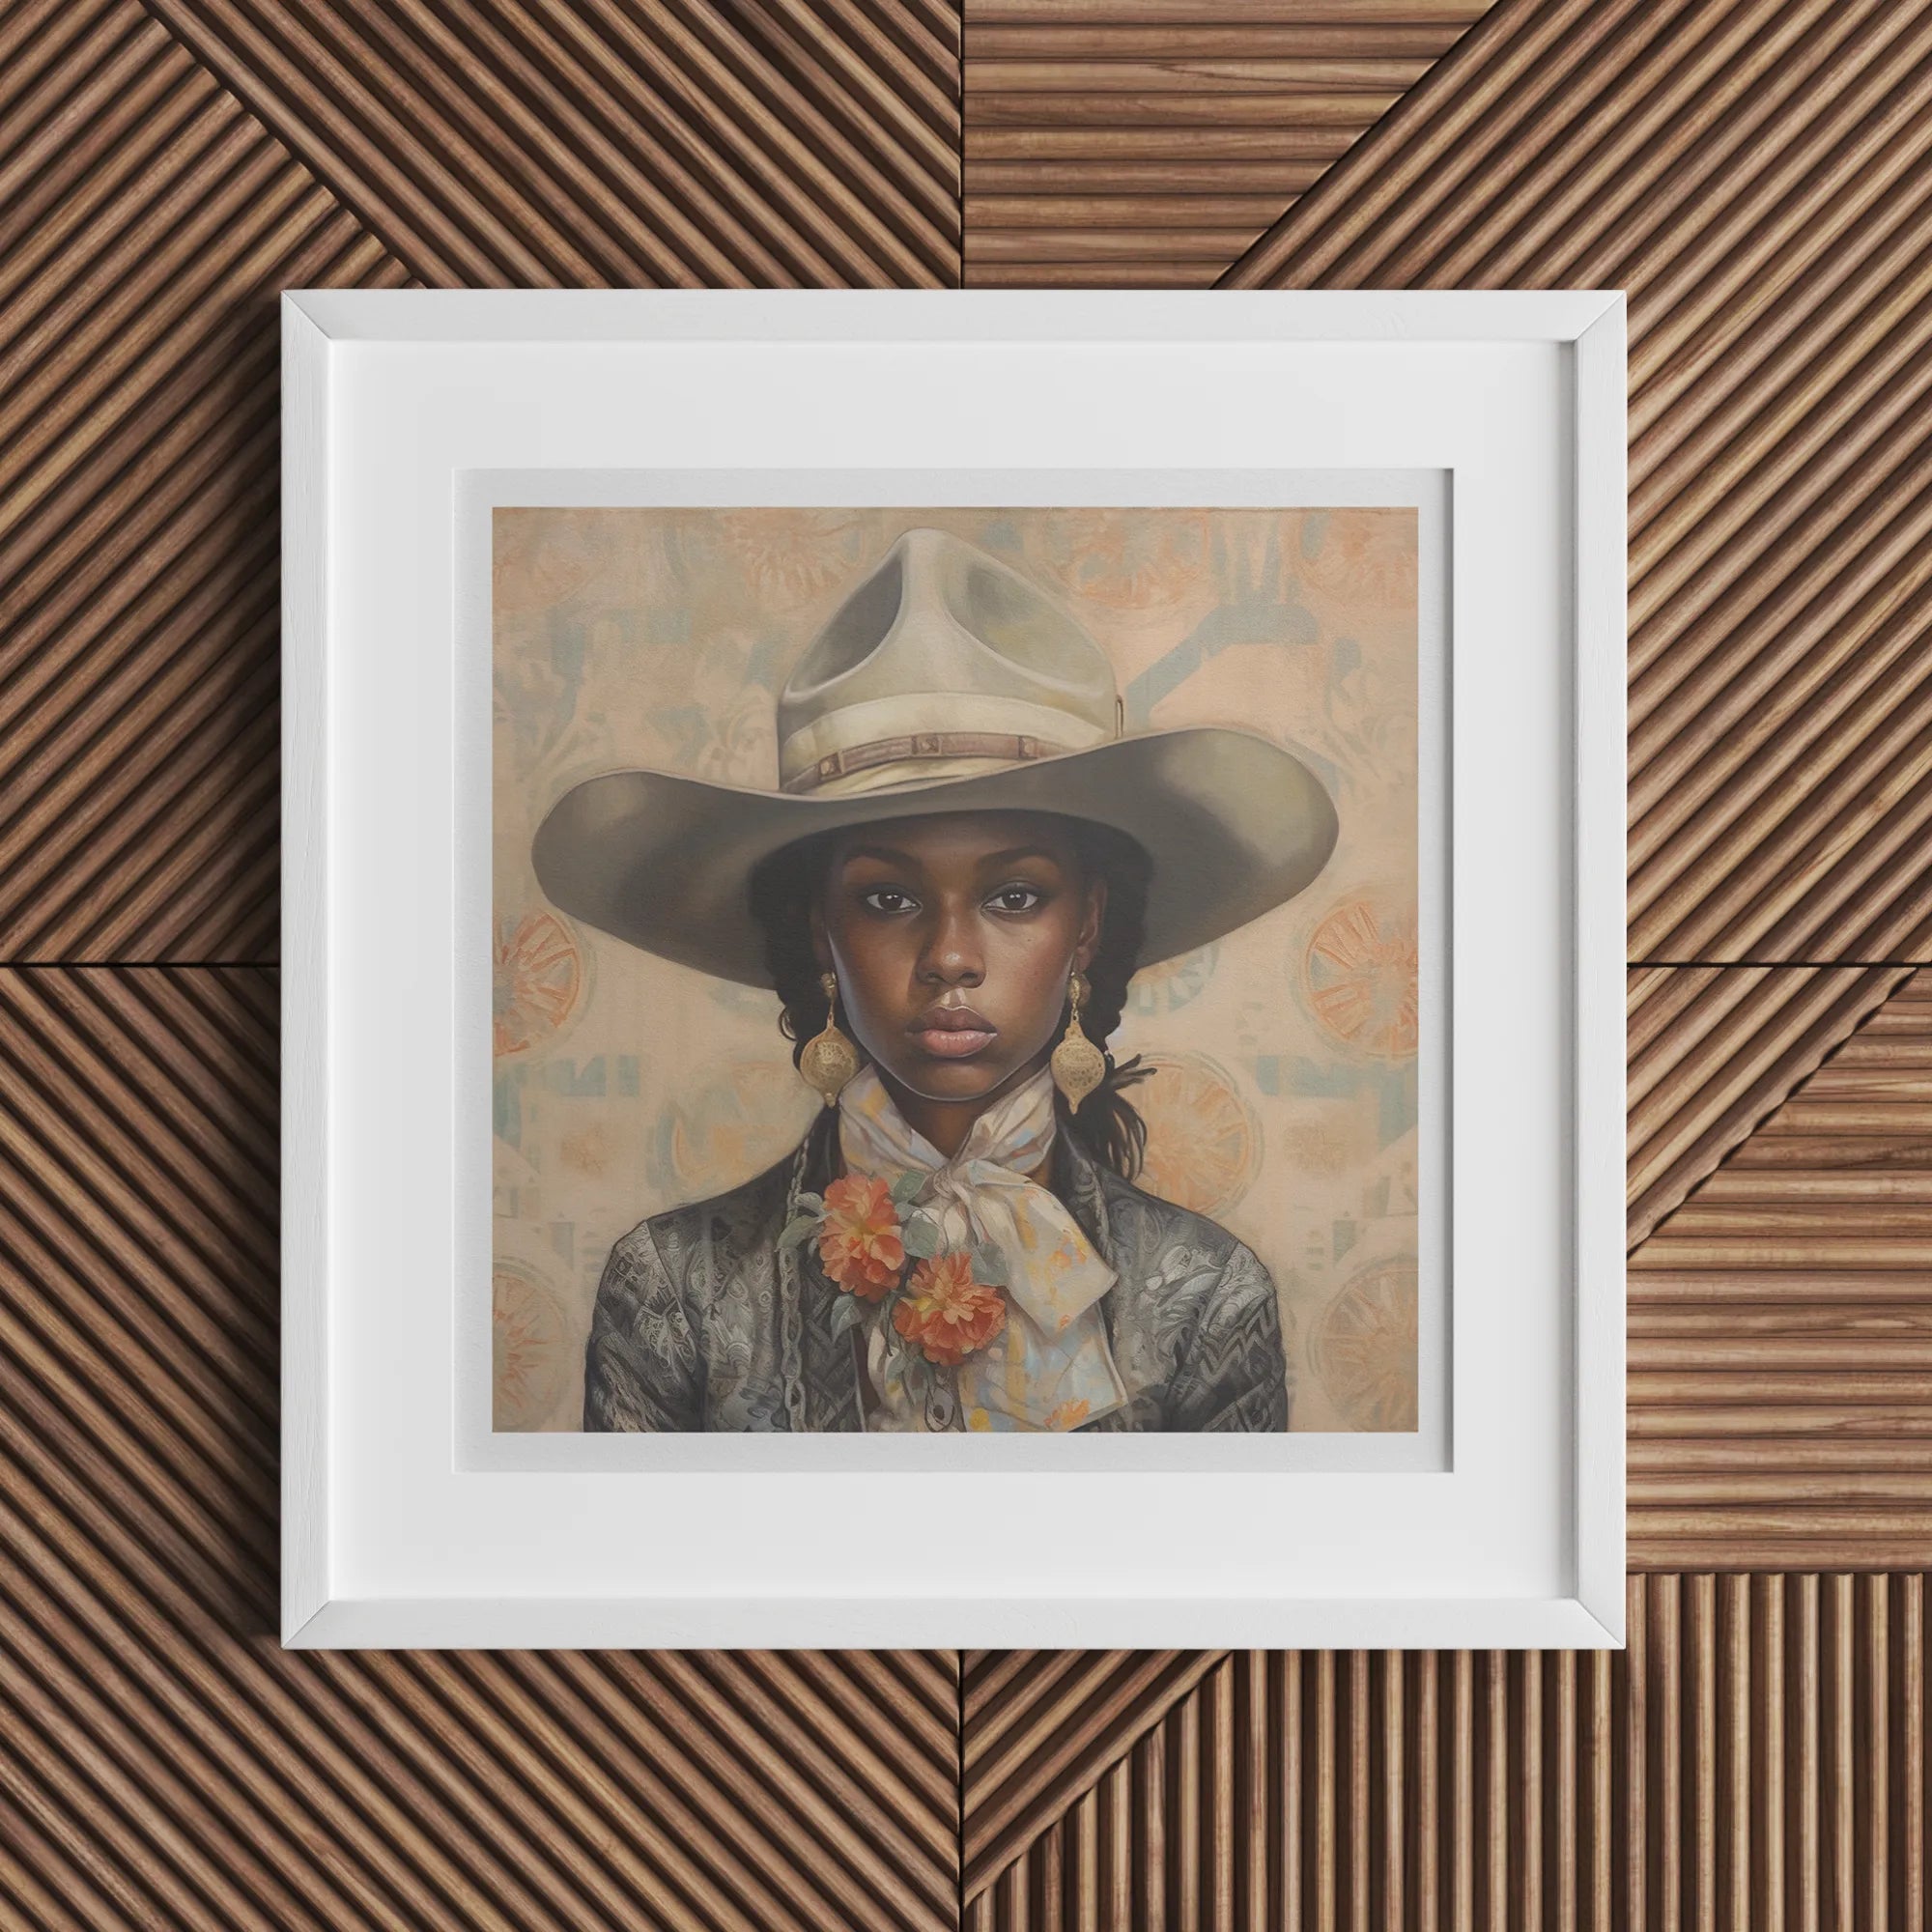 Letitia - Lesbian Black Cowgirl Art Print - Wlw Sapphic Femme - 16’x16’ - Posters Prints & Visual Artwork